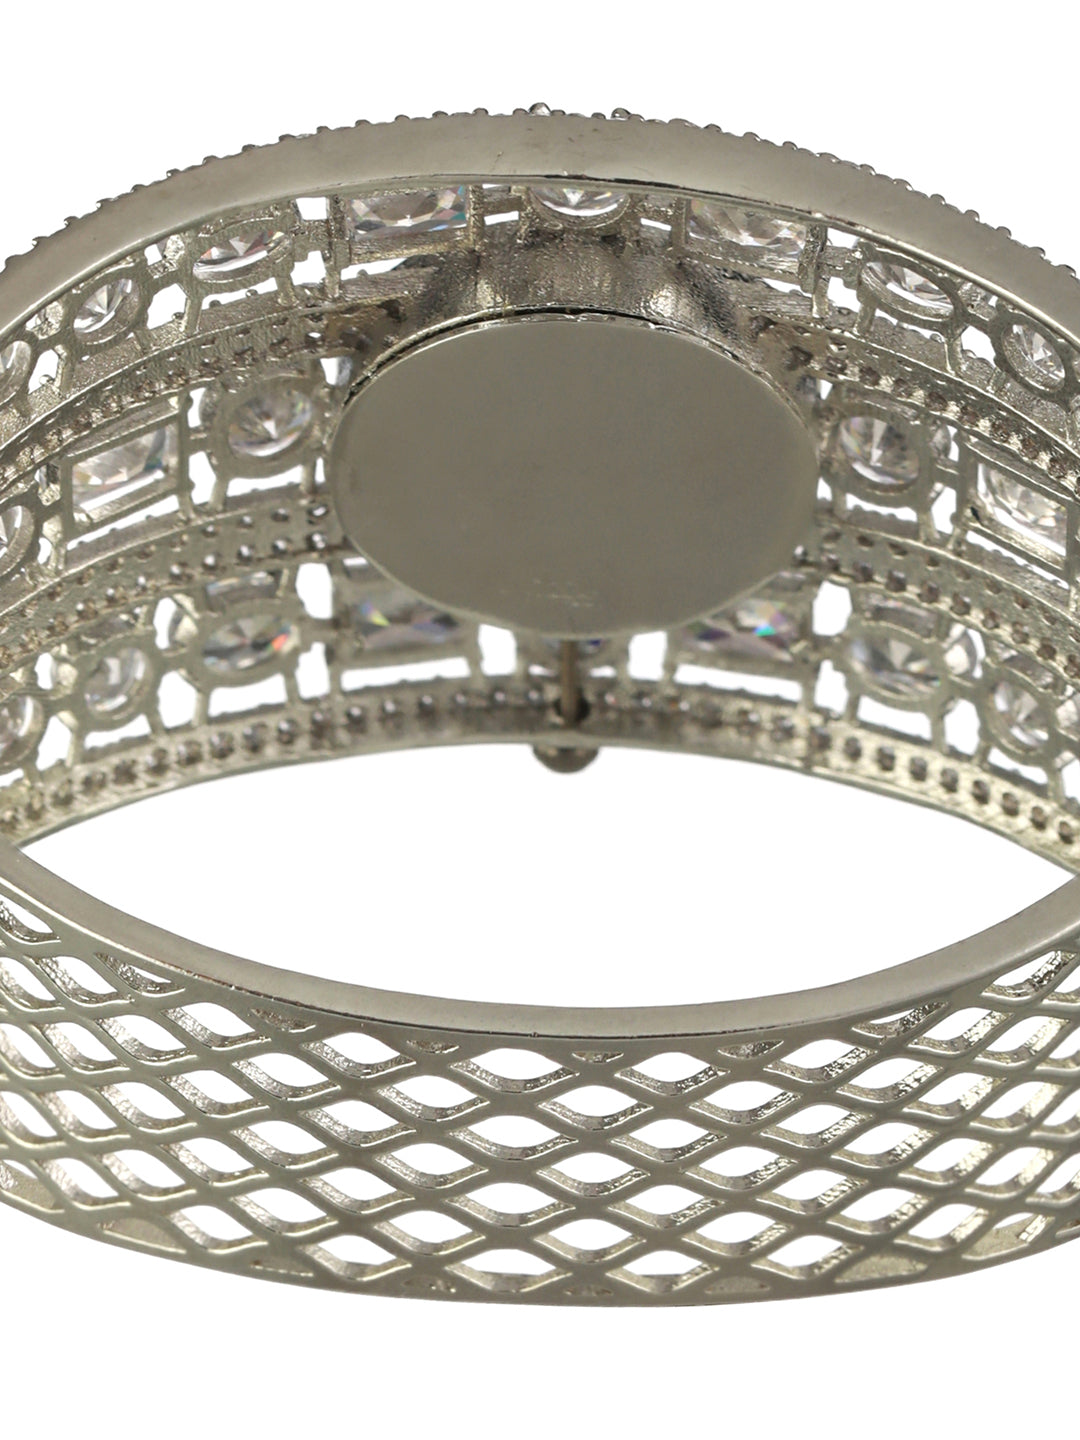 Elegant American Diamond Silver-Plated Bracelet Watch